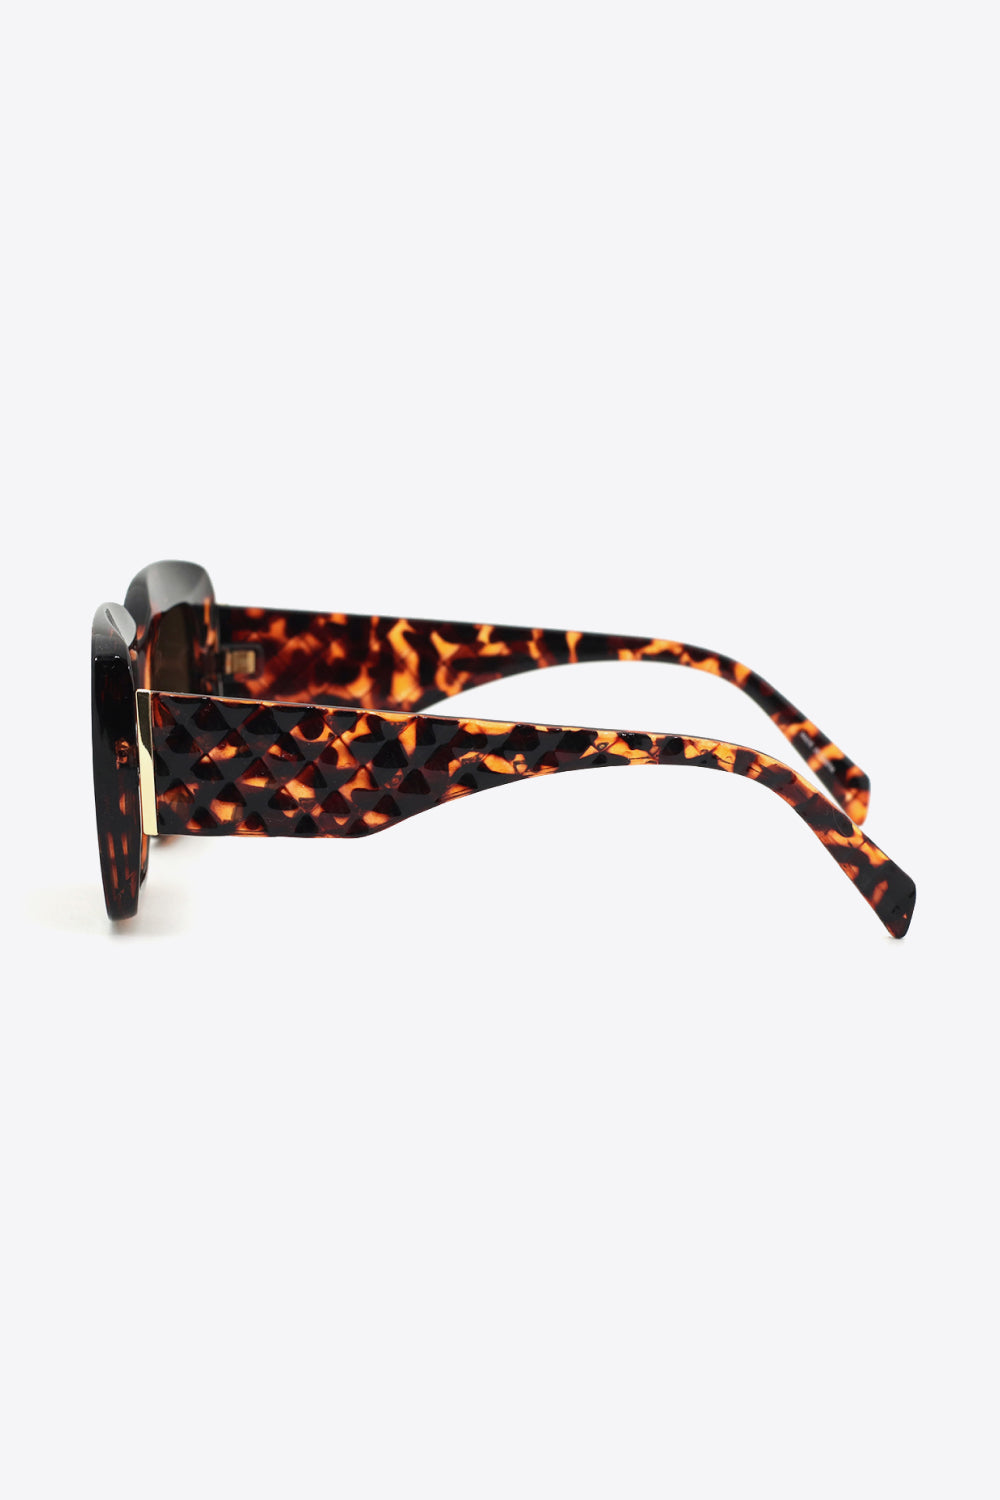 Square Polycarbonate UV400 Sunglasses - BEAUTY COSMOTICS SHOP